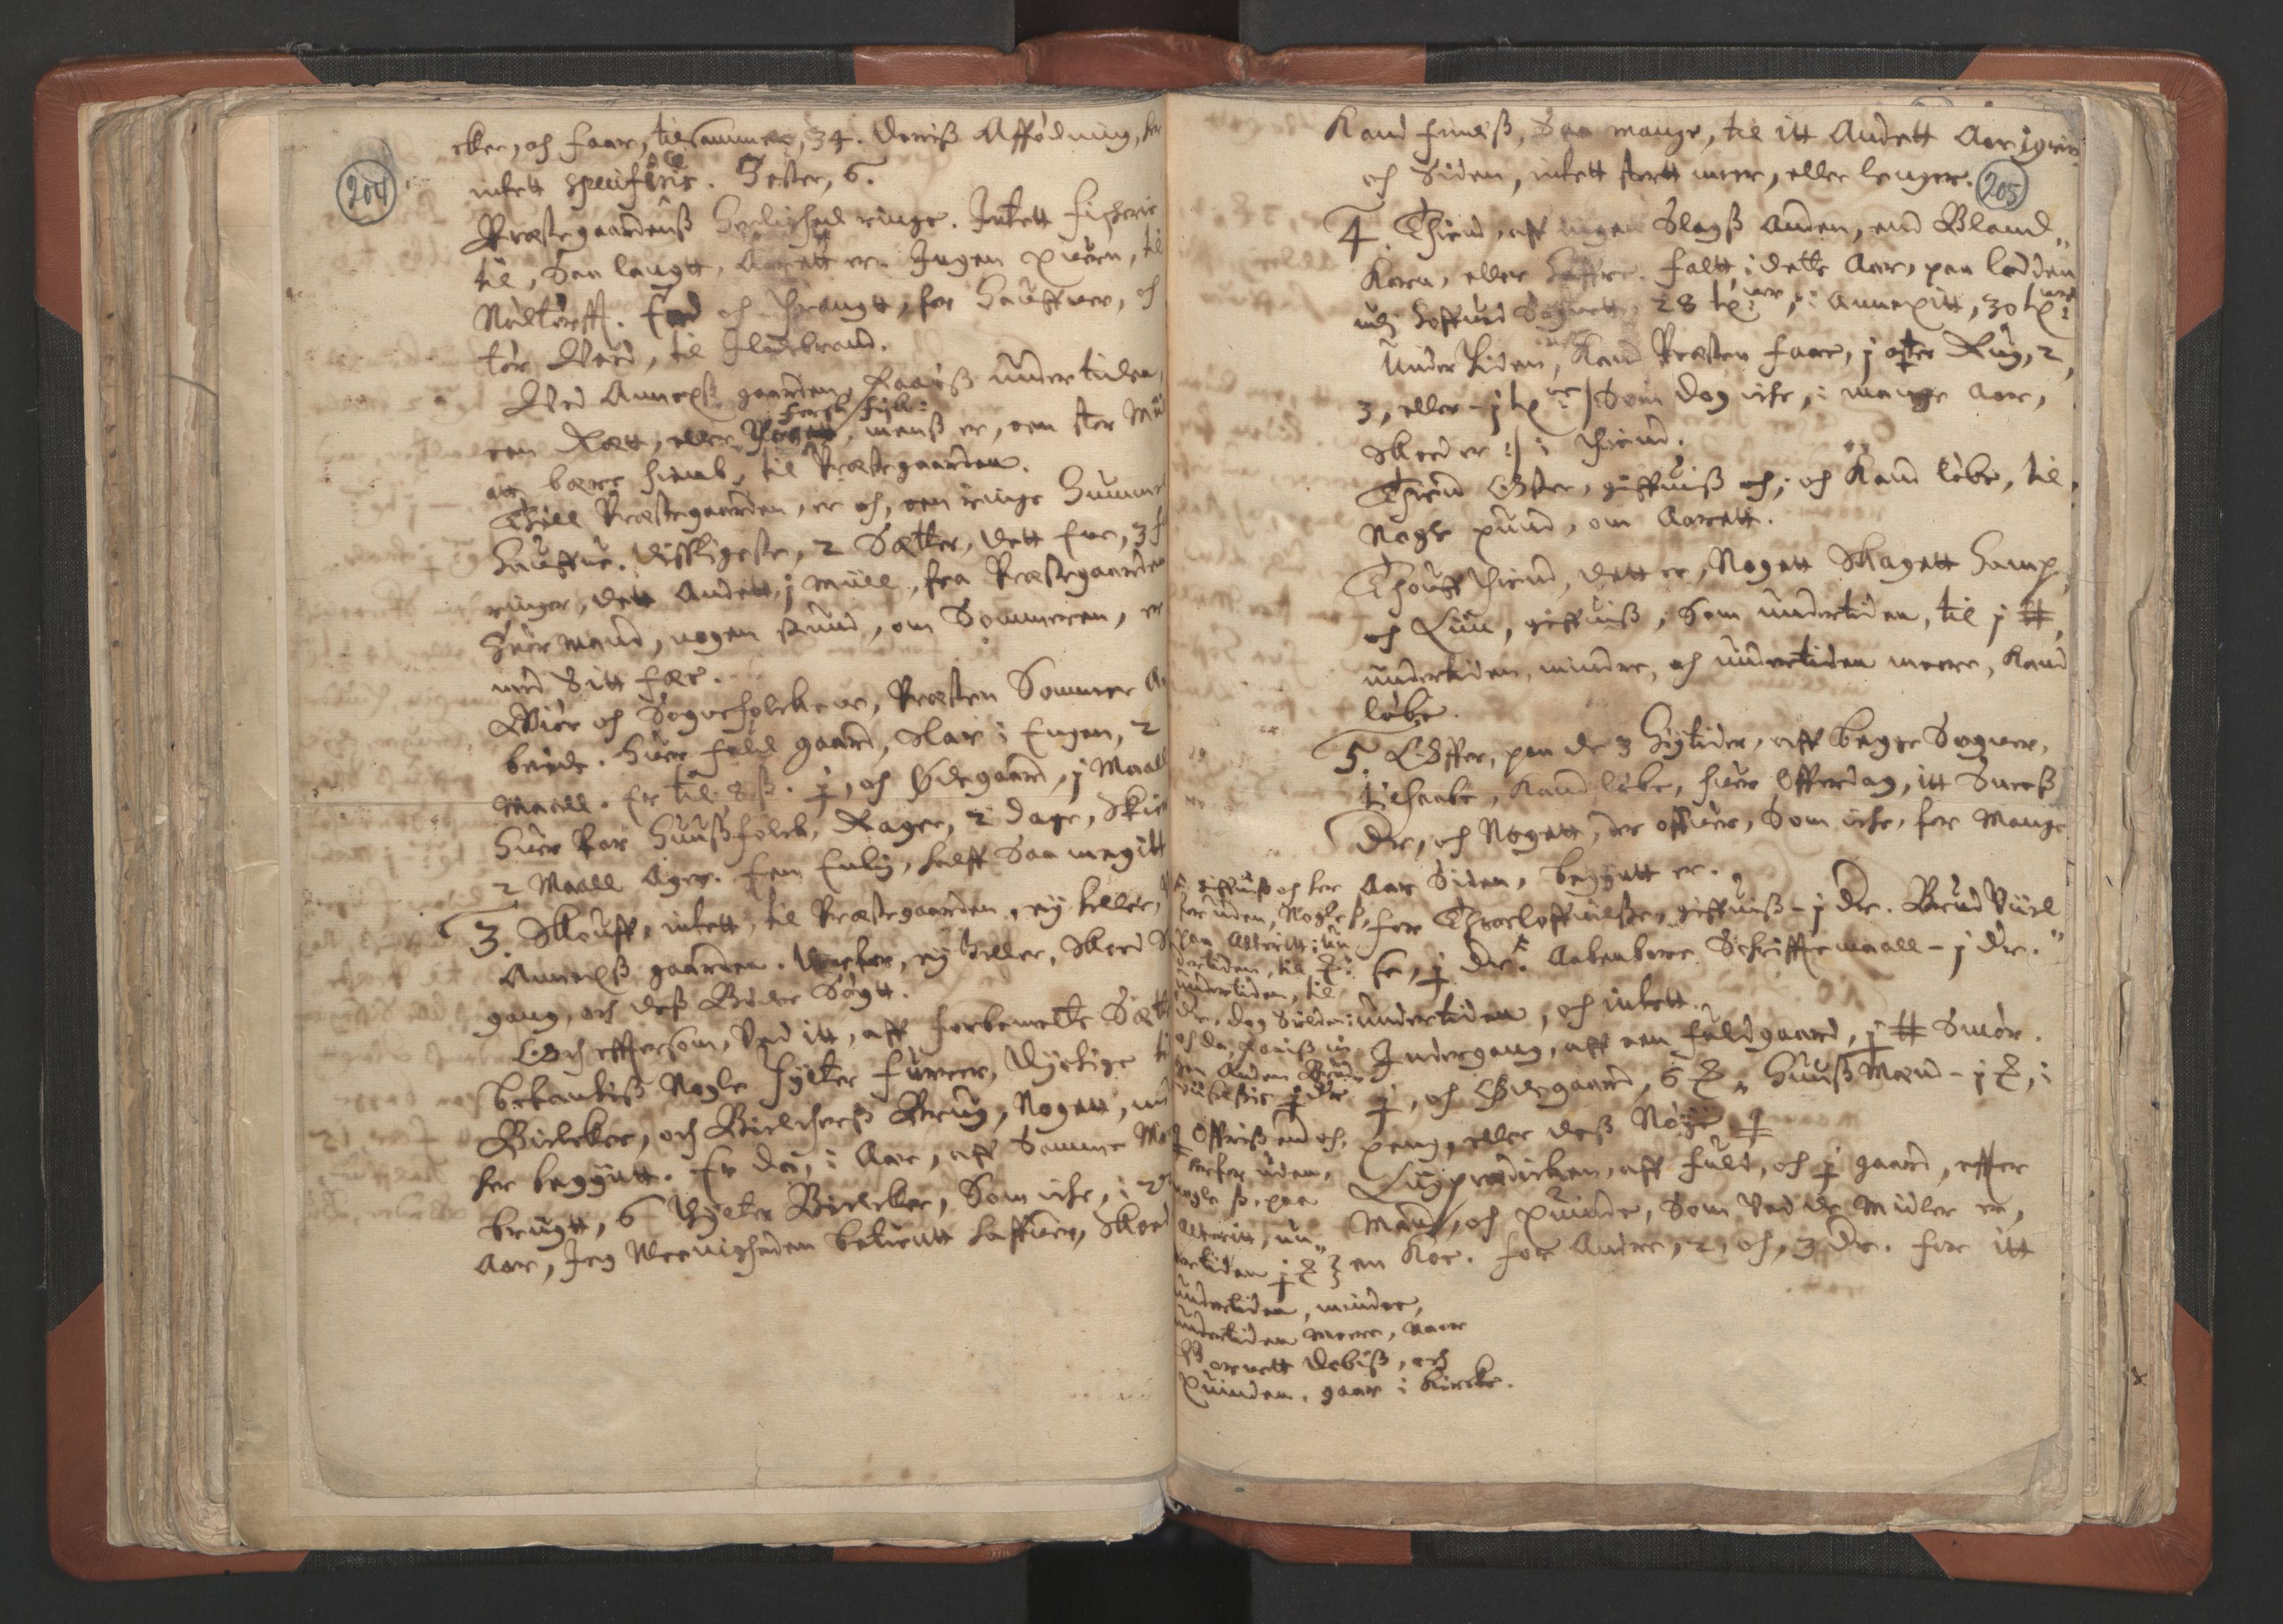 RA, Vicar's Census 1664-1666, no. 12: Øvre Telemark deanery, Nedre Telemark deanery and Bamble deanery, 1664-1666, p. 204-205